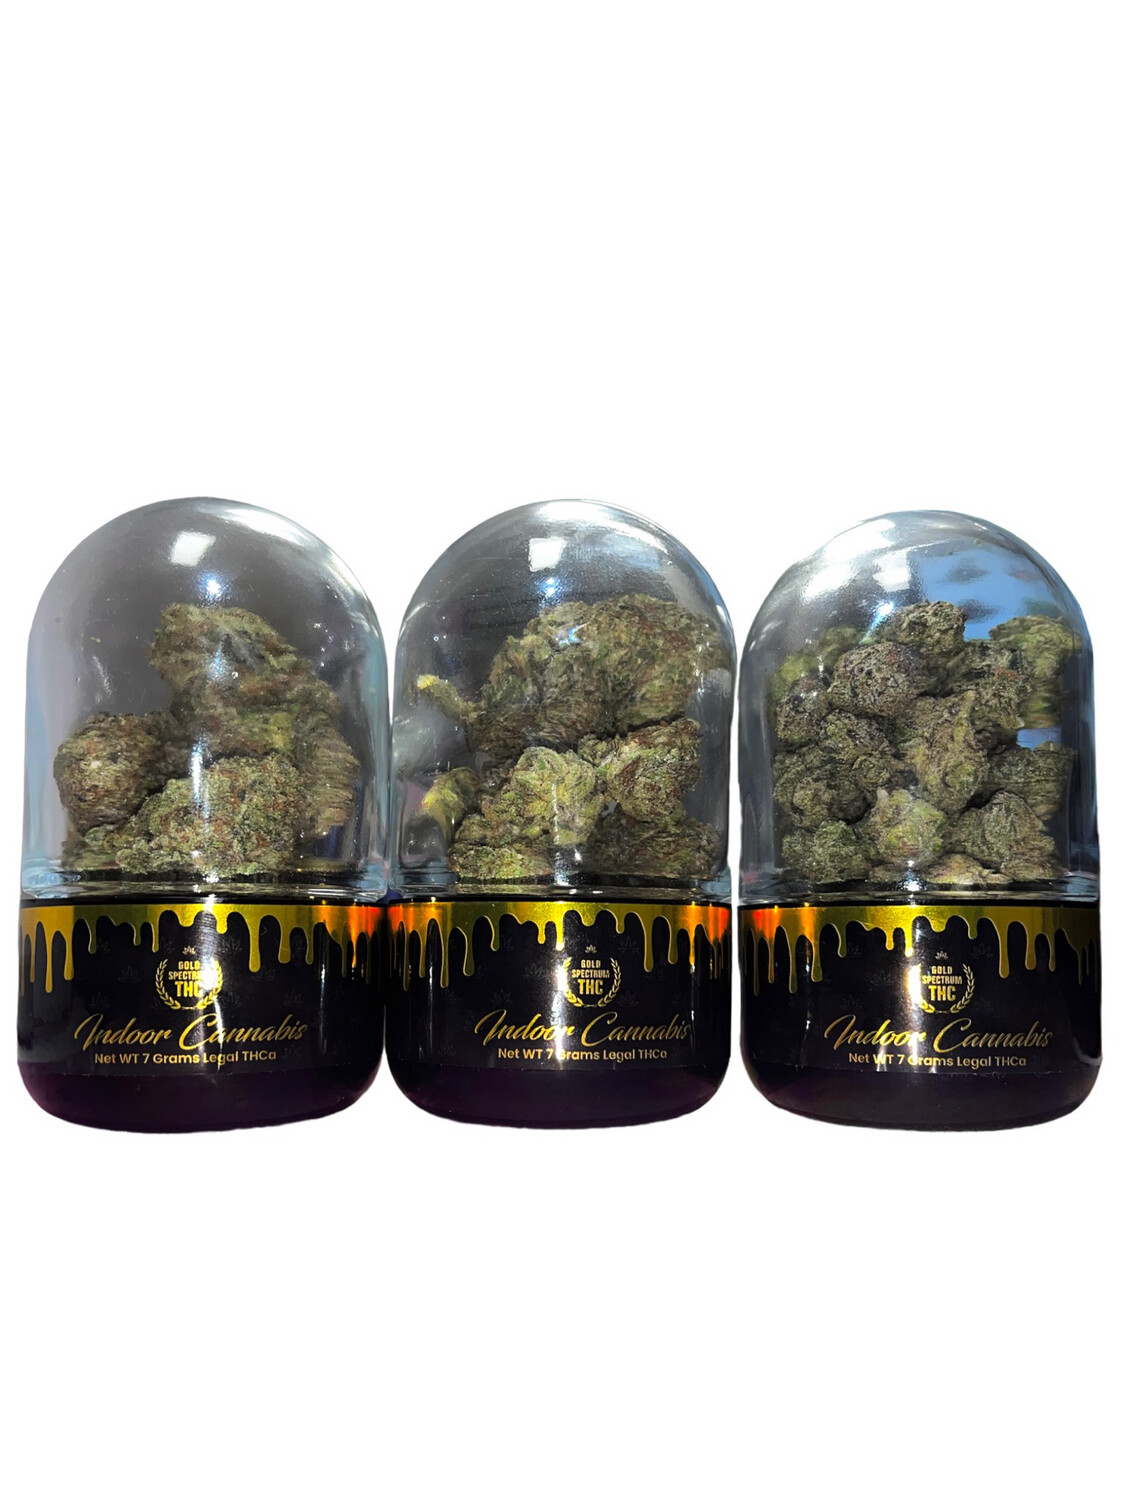 Gold Spectrum THC Indoor Cannabis | 7 Grams Legal THC-A